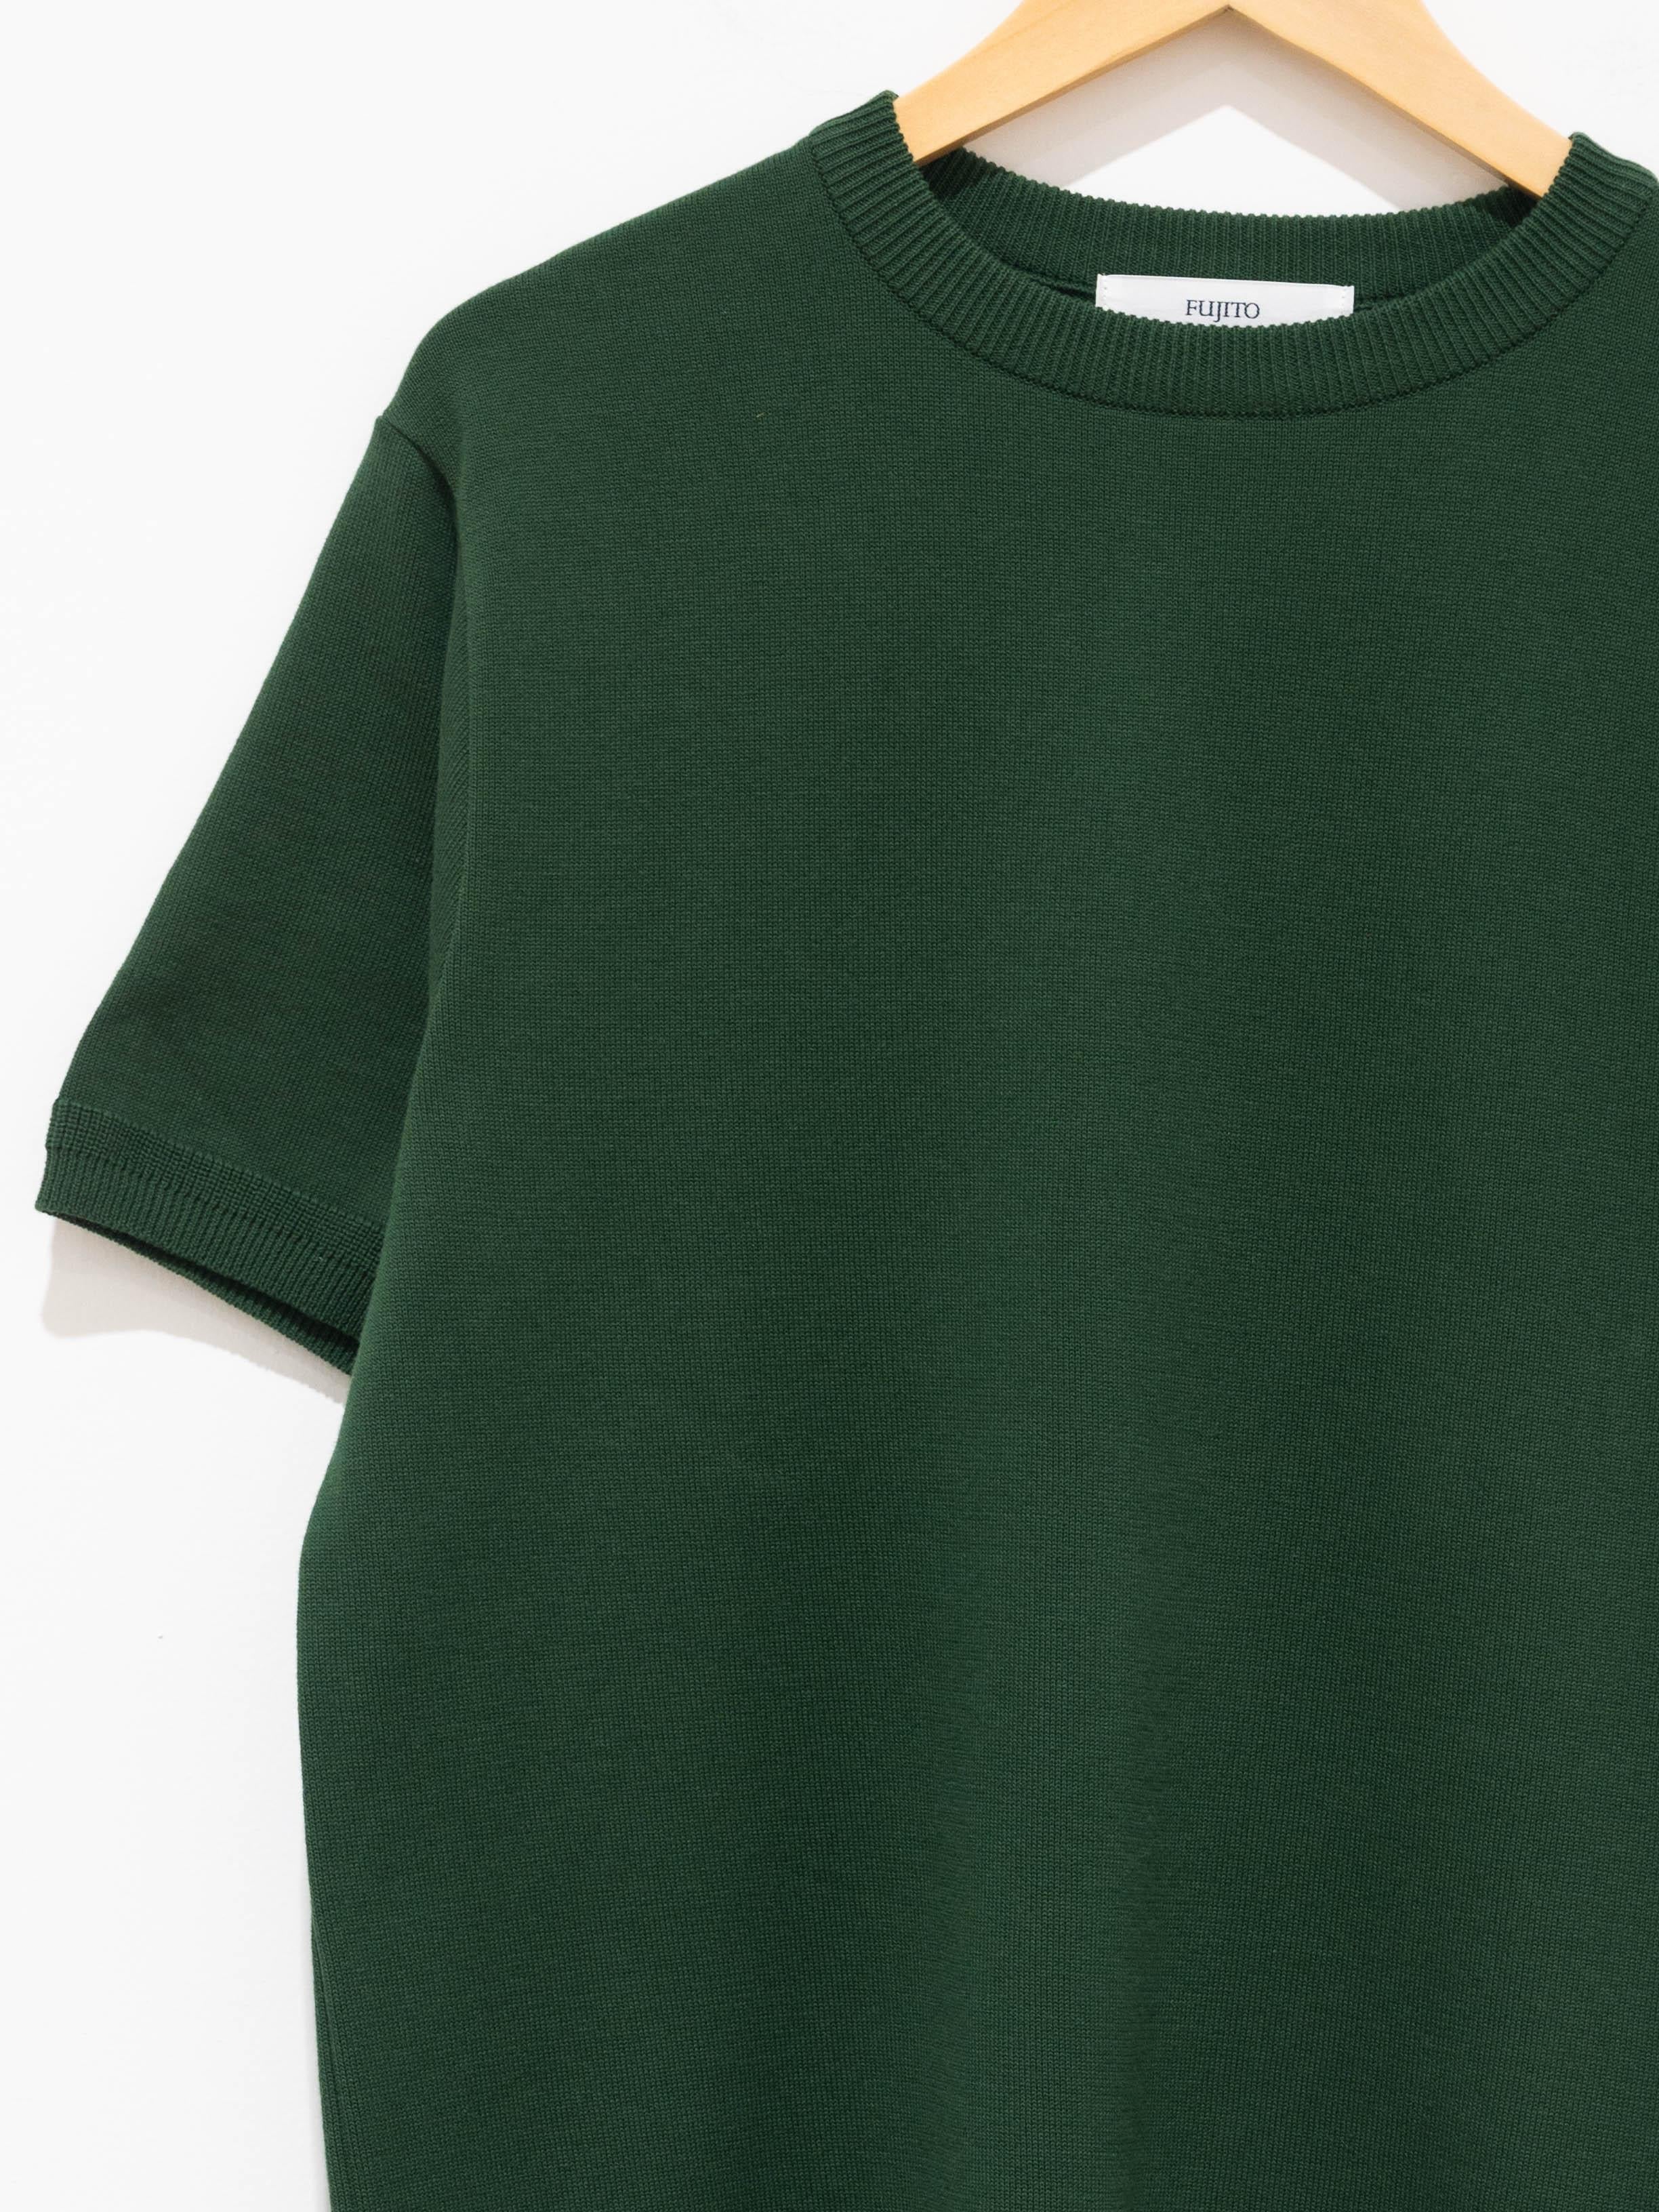 Namu Shop - Fujito C/N Knit T-Shirt - Forest Green